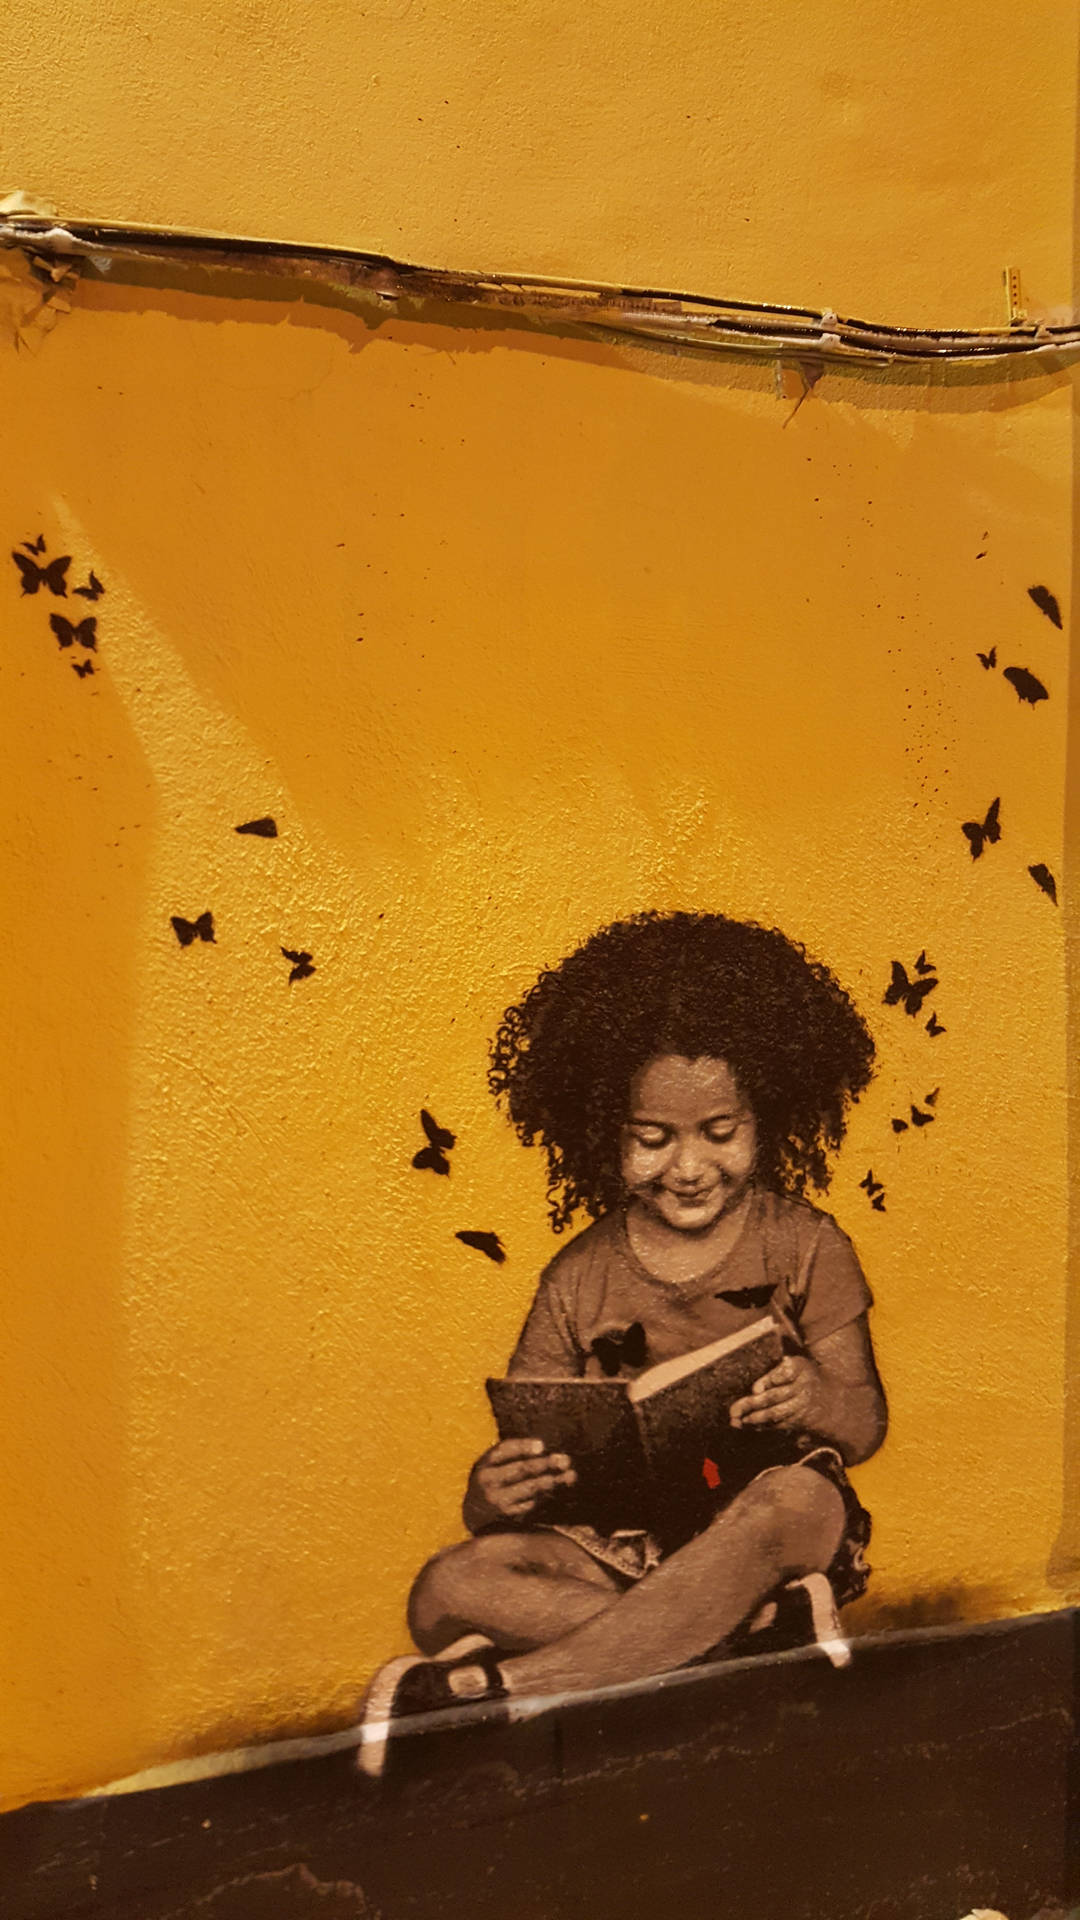 Bookworm Kid Artfully Expresses Themselves Through Street Art Wallpaper